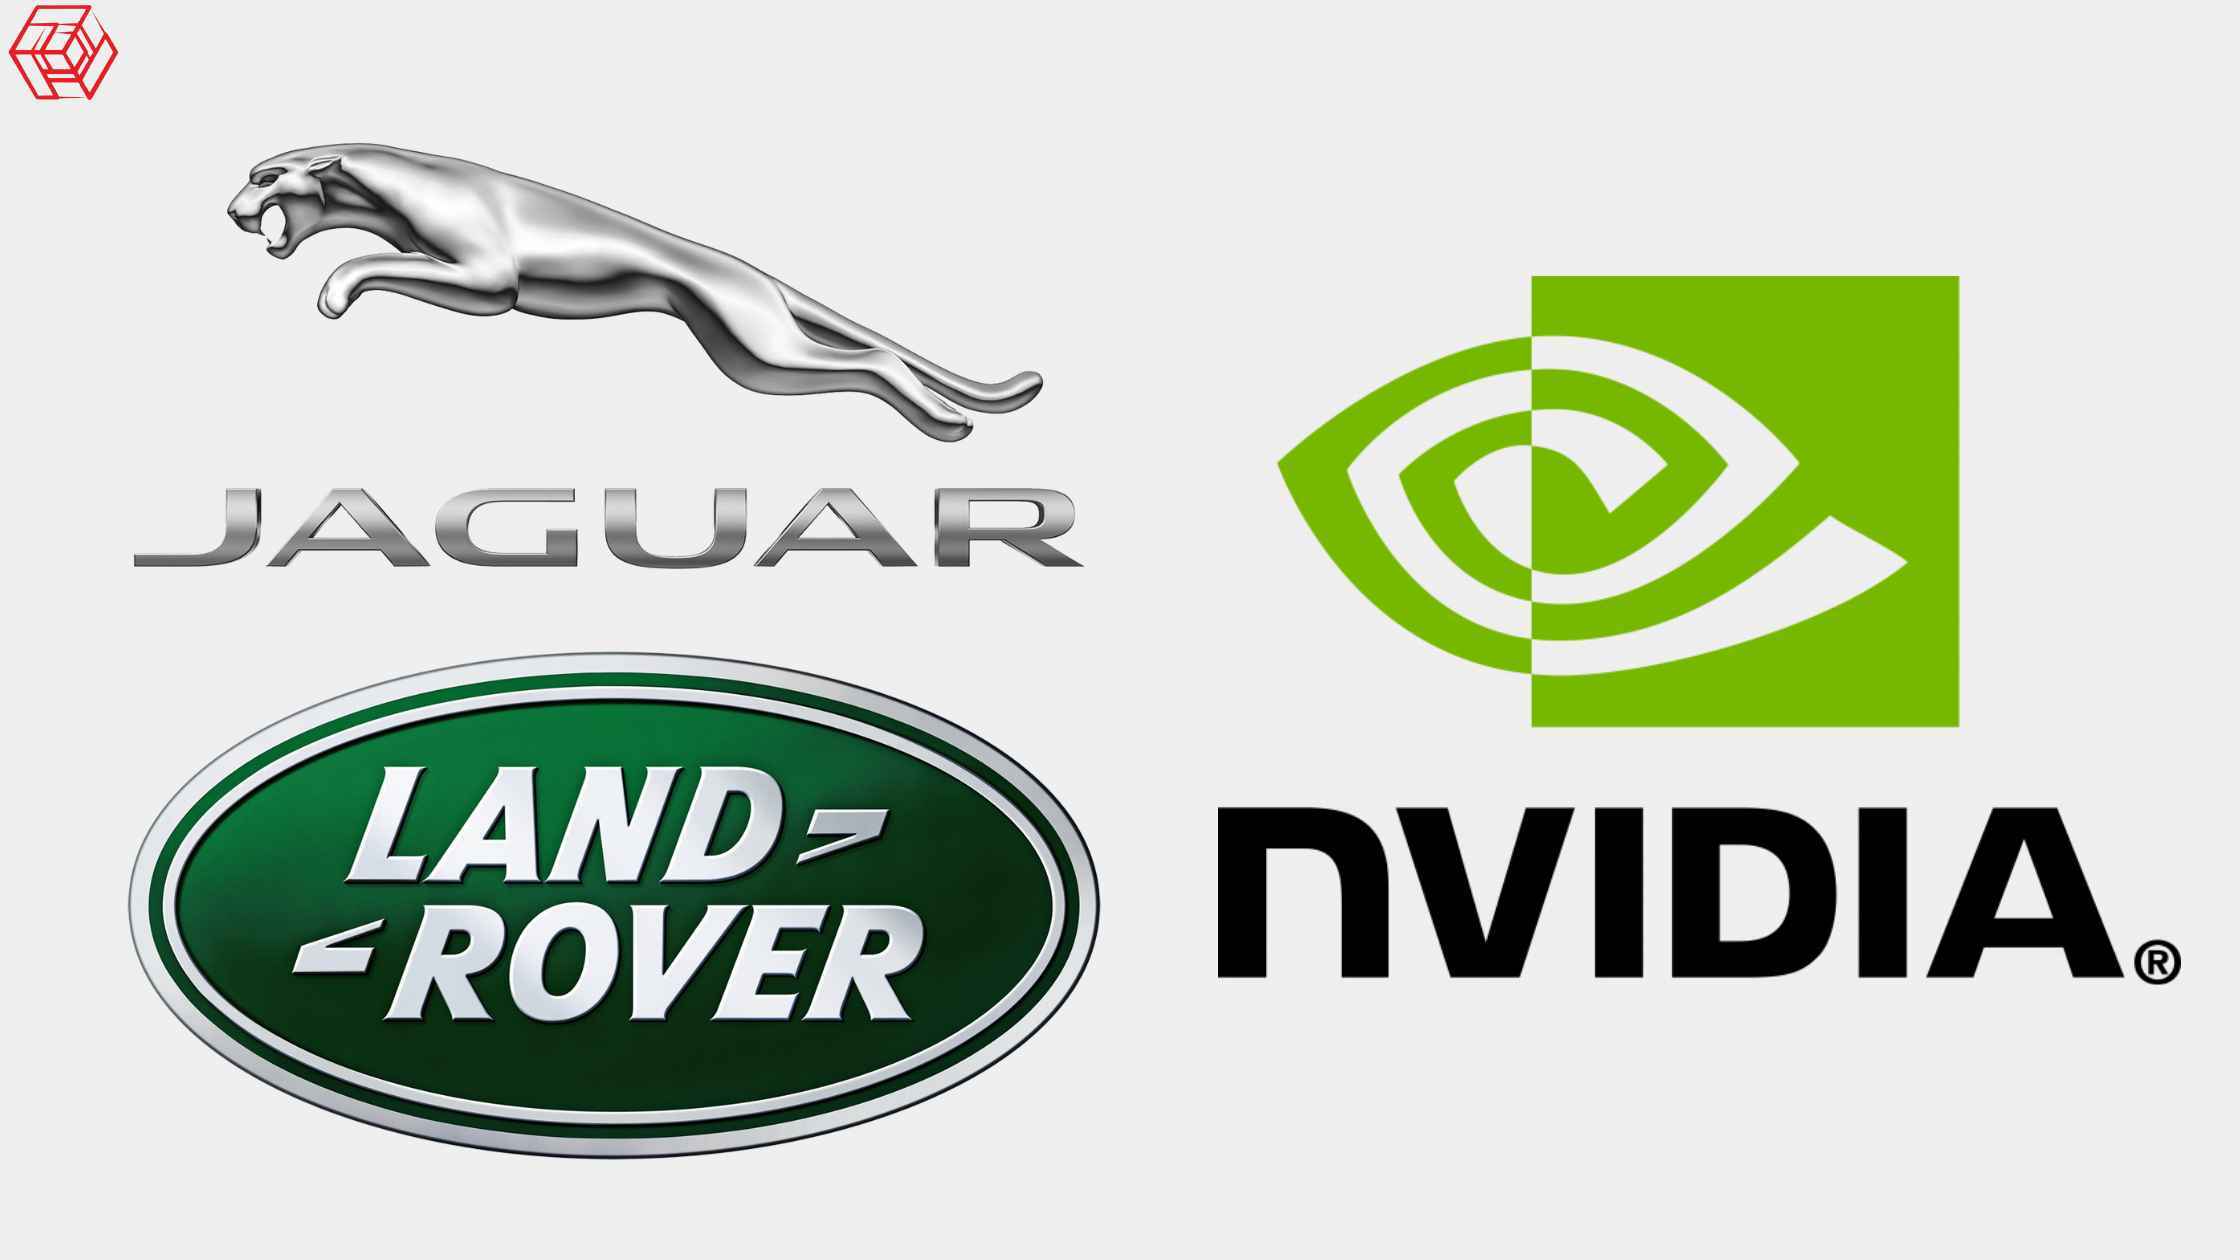 Jaguar-Land Rover will use Nvidia Drive